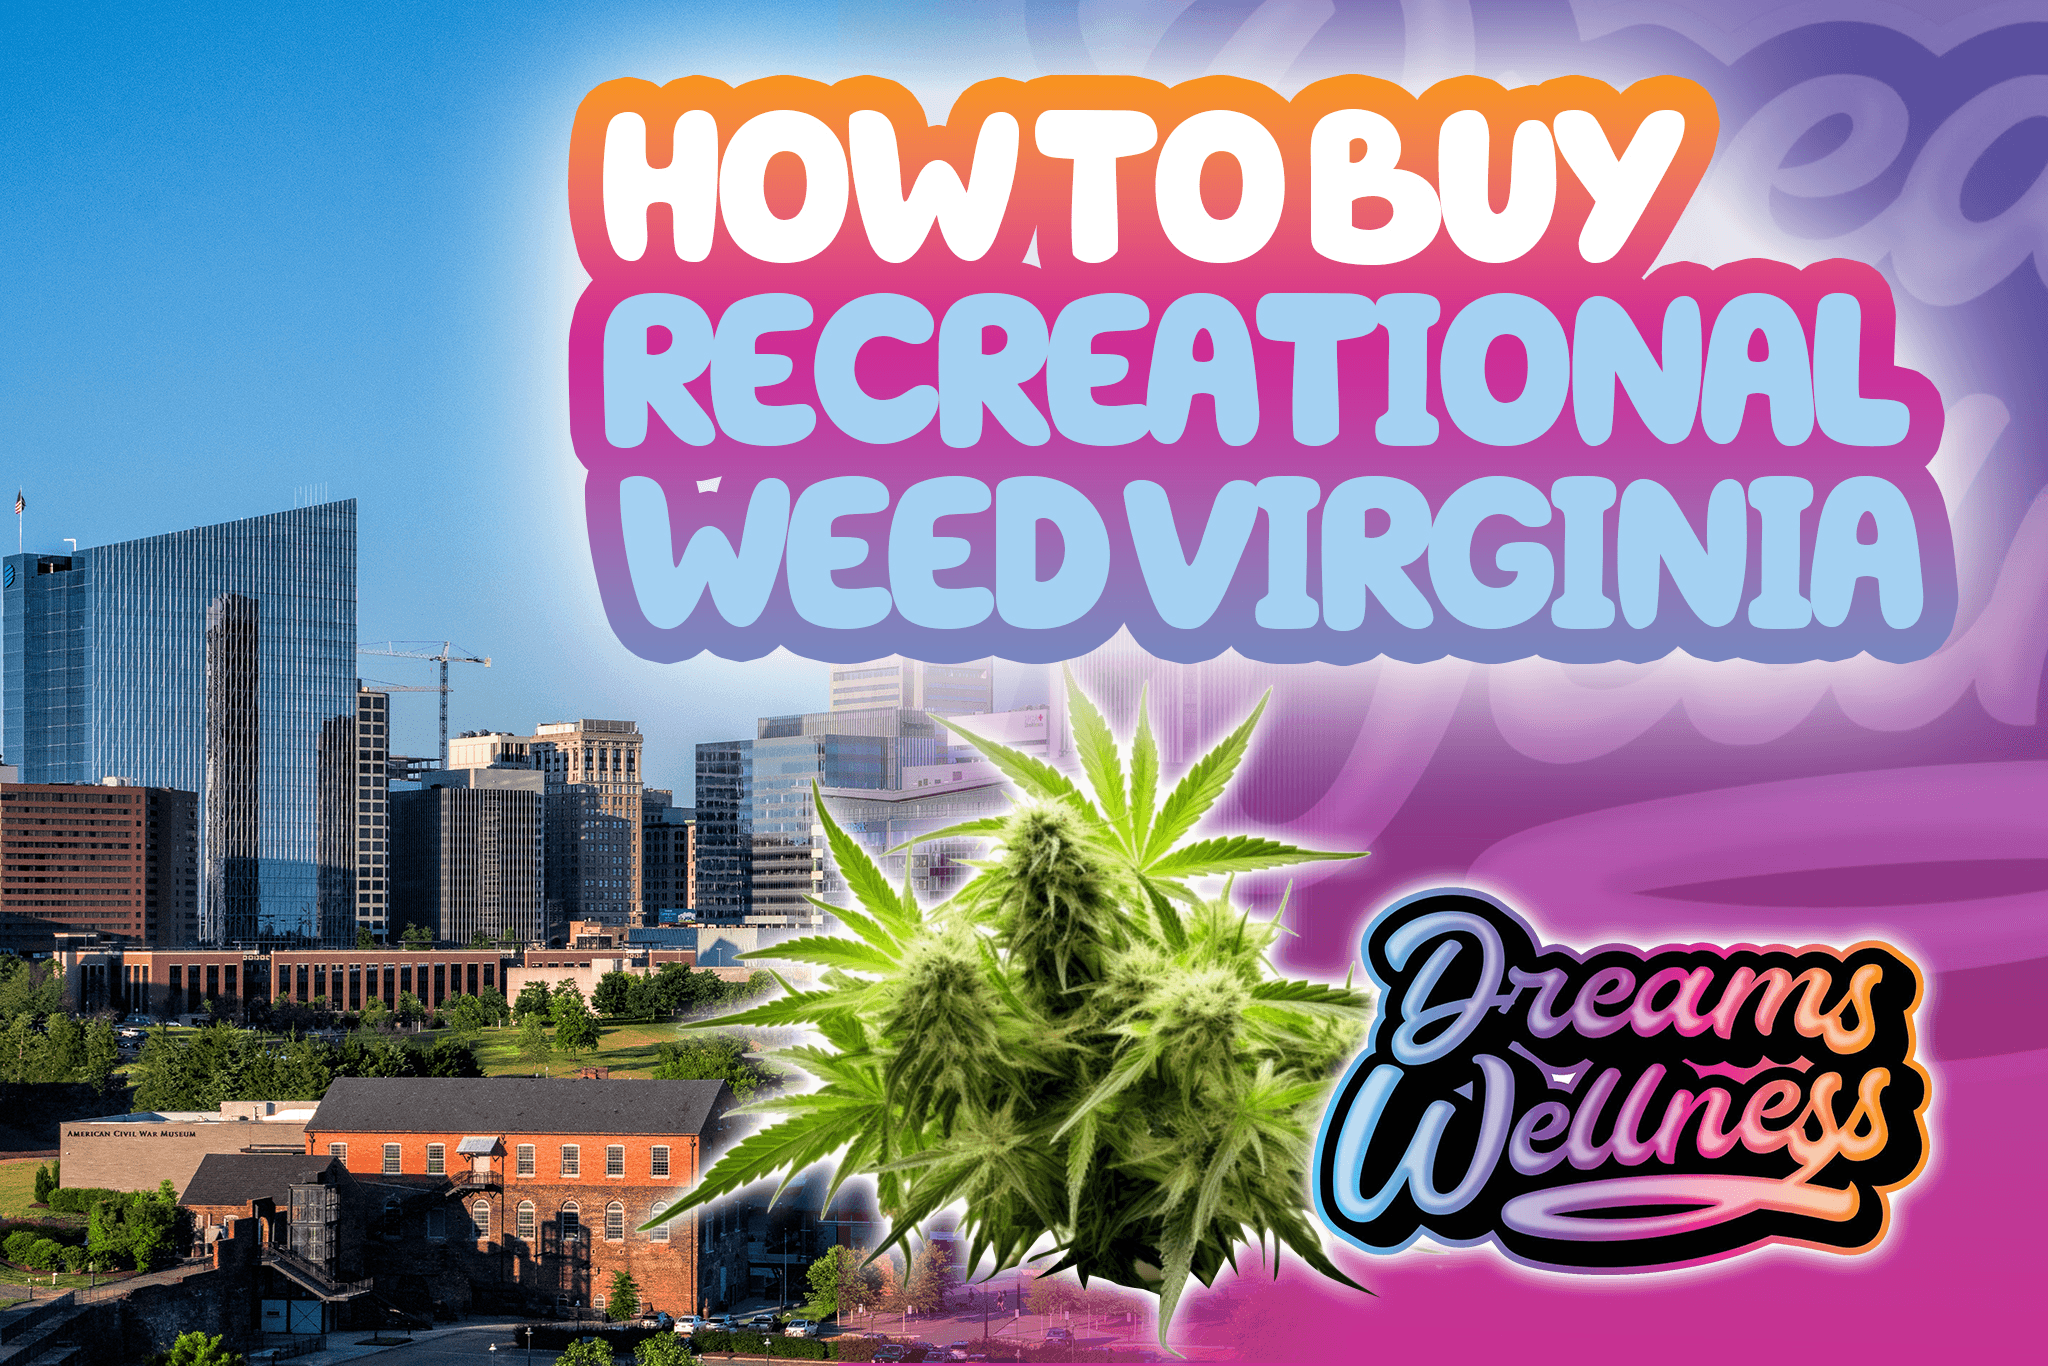 How To Buy Recreational Weed Virginia